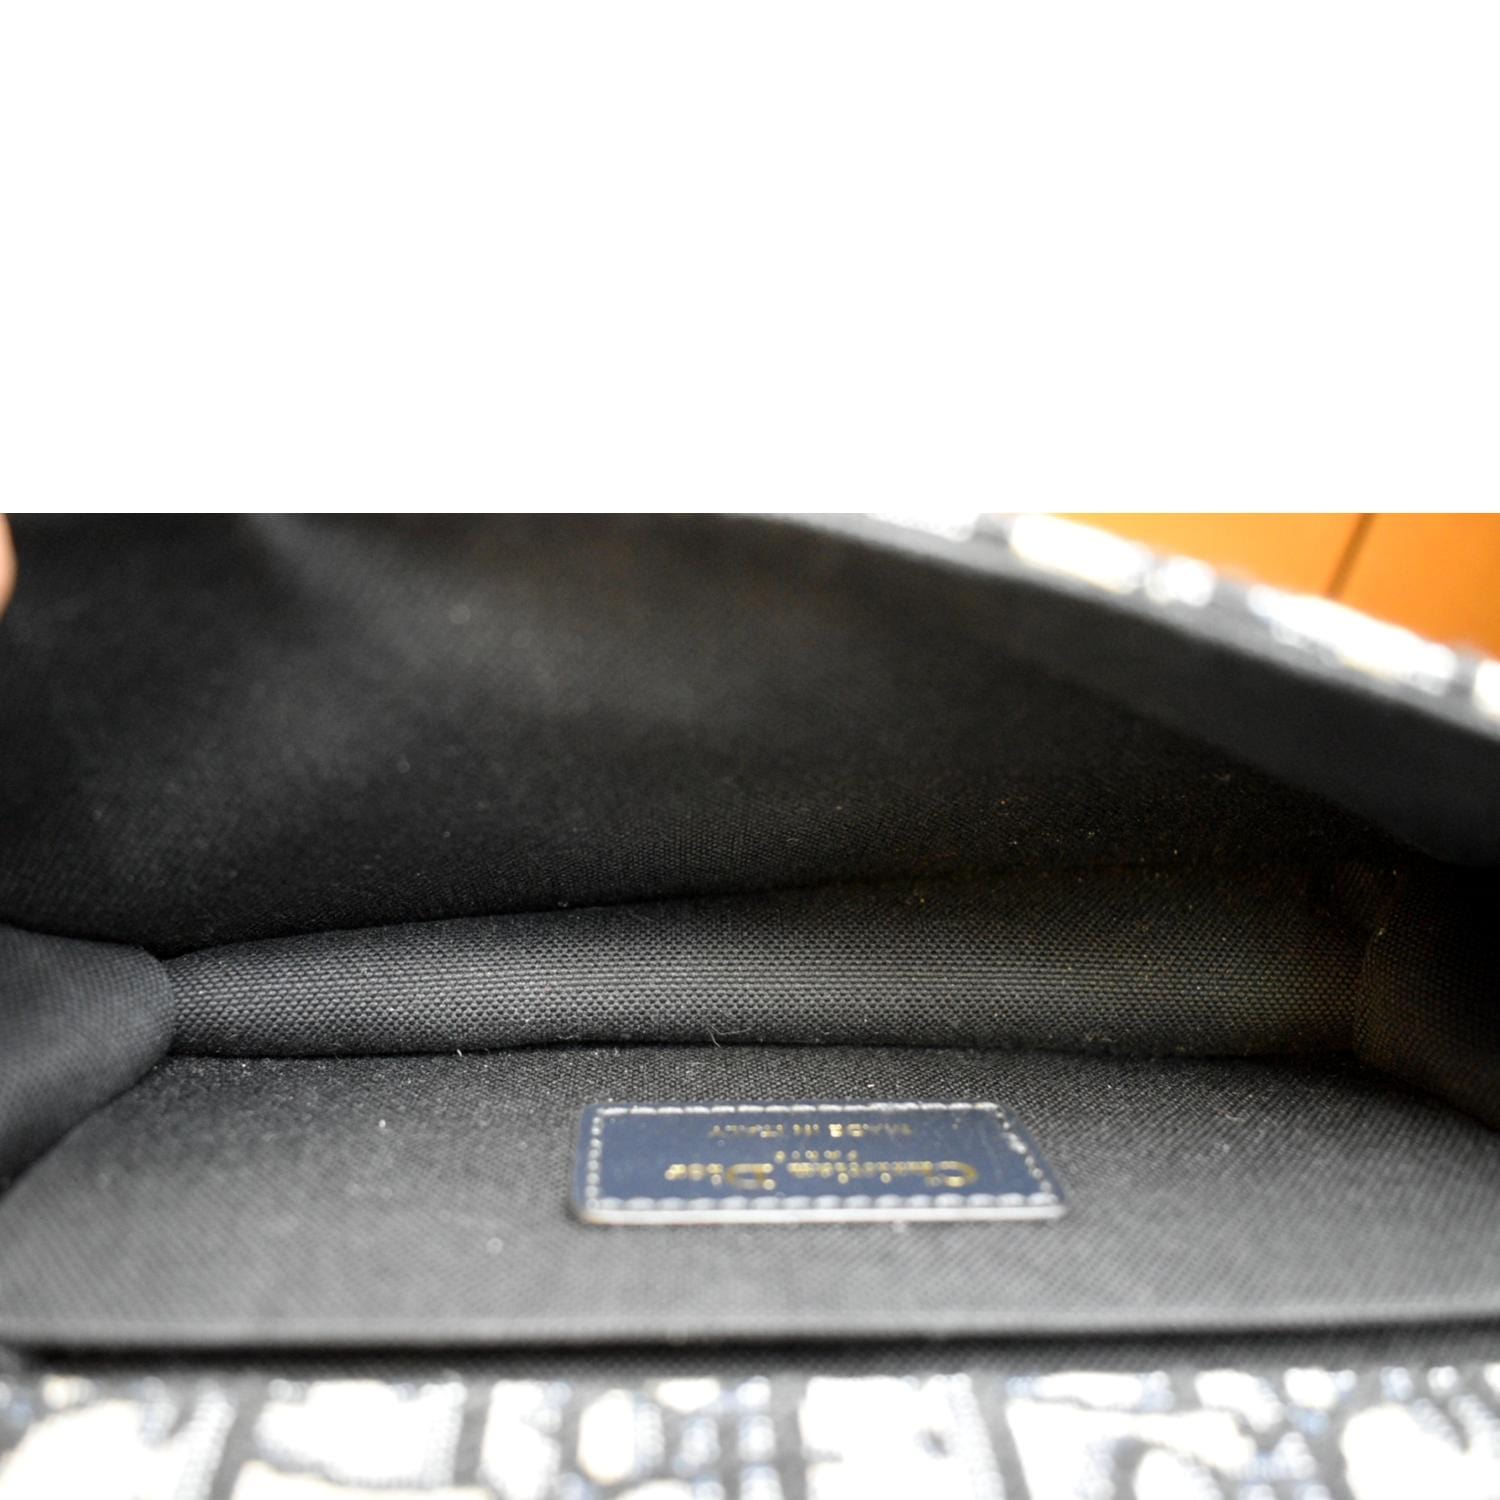 Christian Dior Bag Purse Travel - Authentic Guarantee